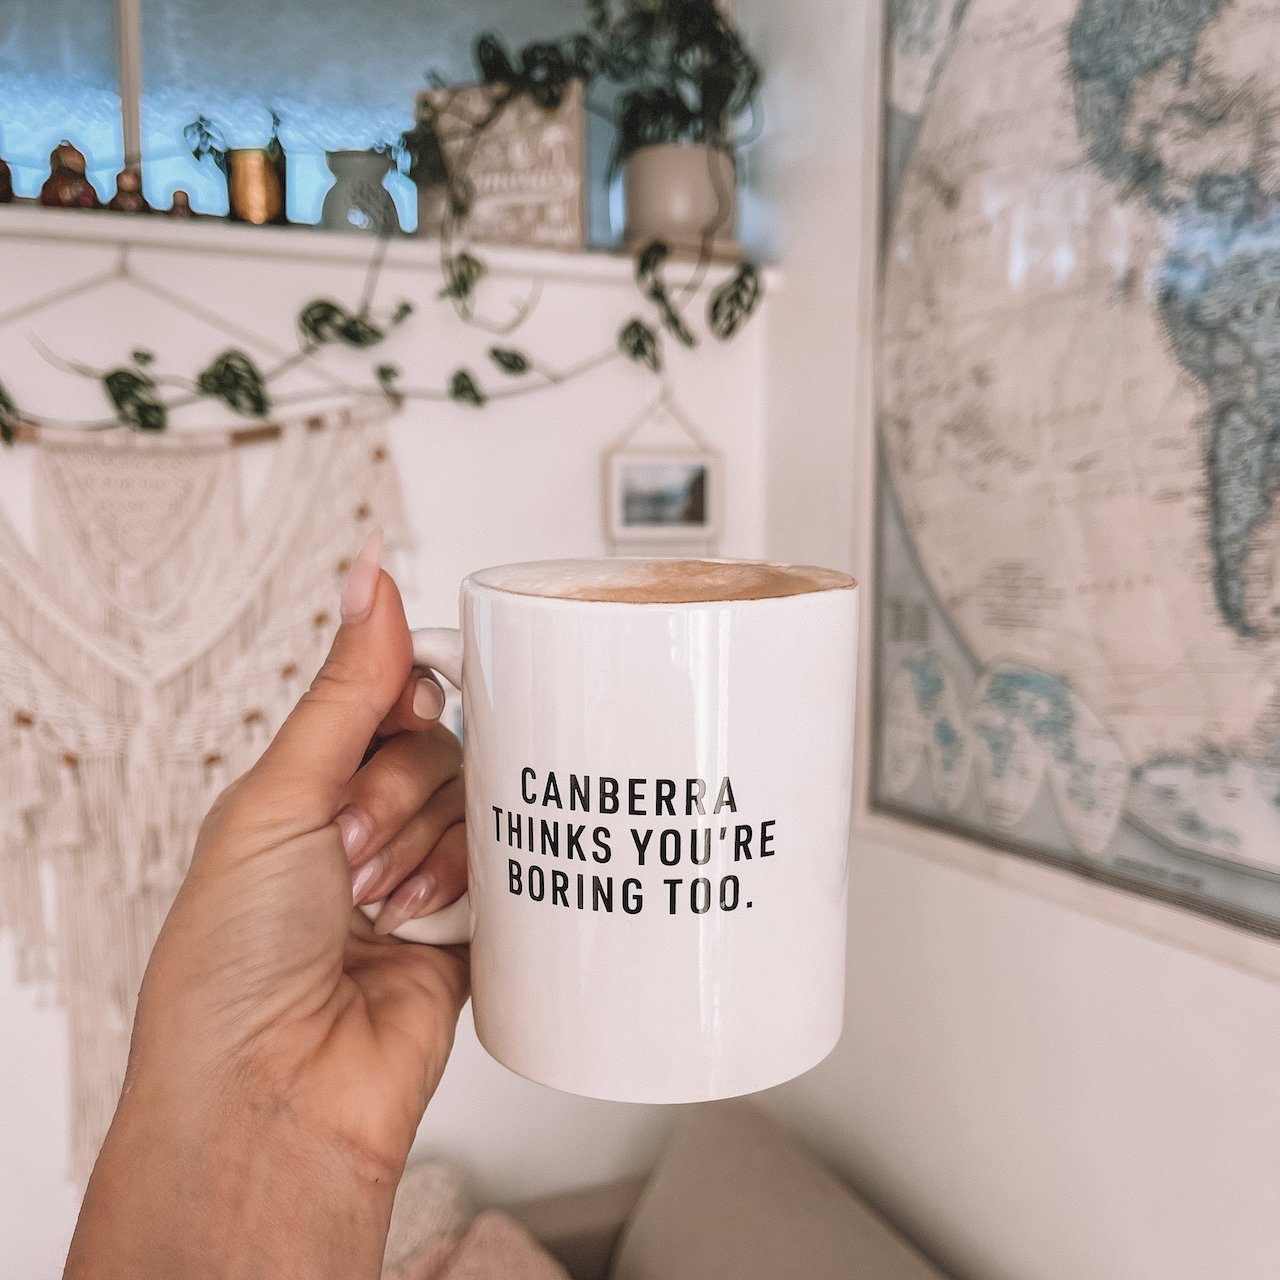 Canberra thinks you're boring too - Coffee Mug - North Dot South - Canberra - Australian Capital Territory - Australia